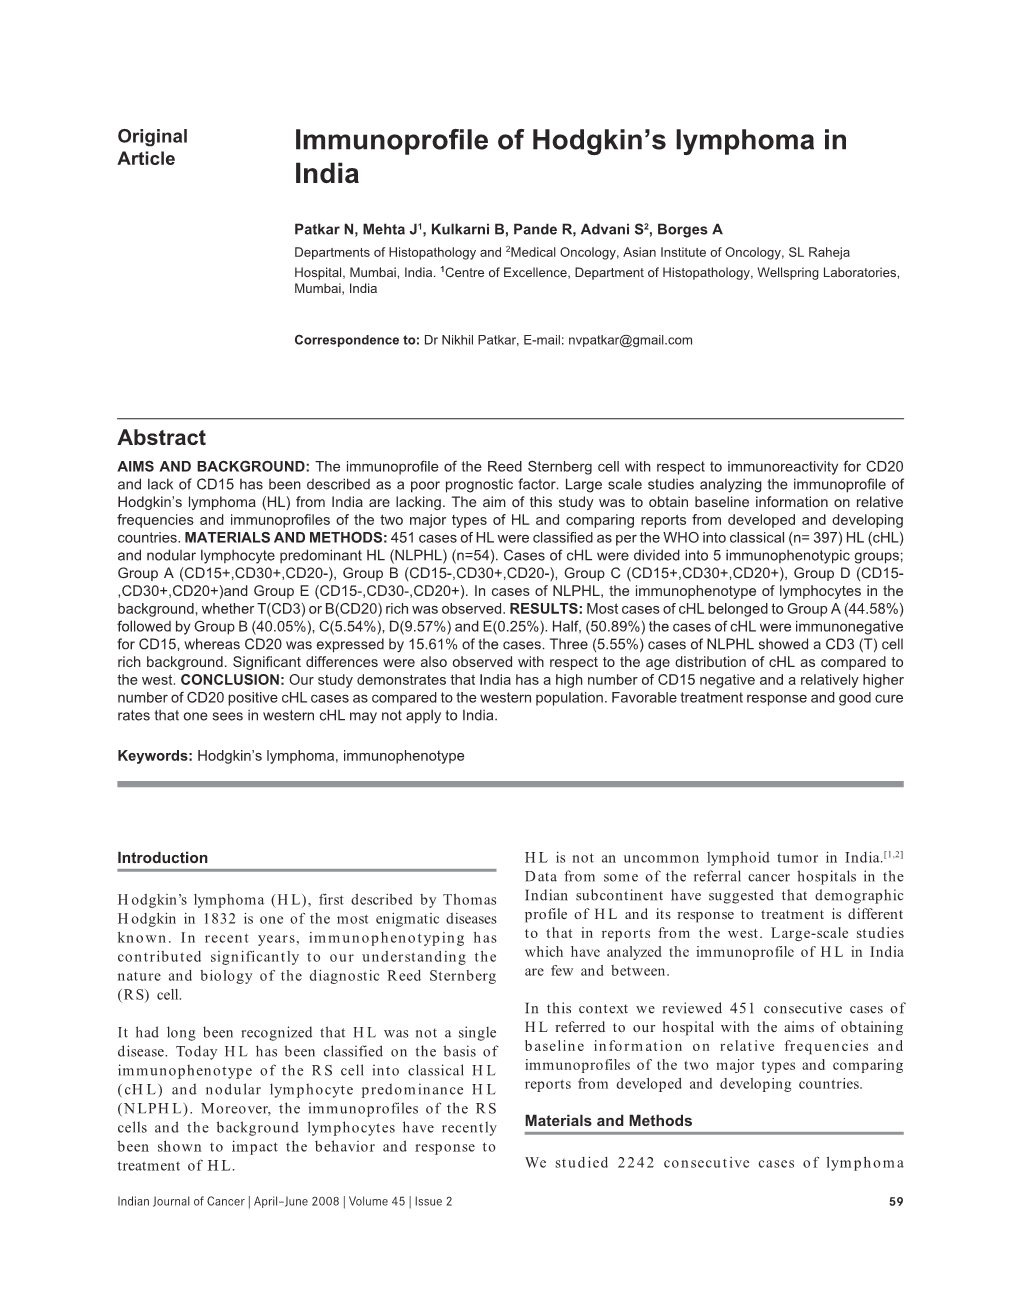 Immunoprofile of Hodgkin's Lymphoma in India